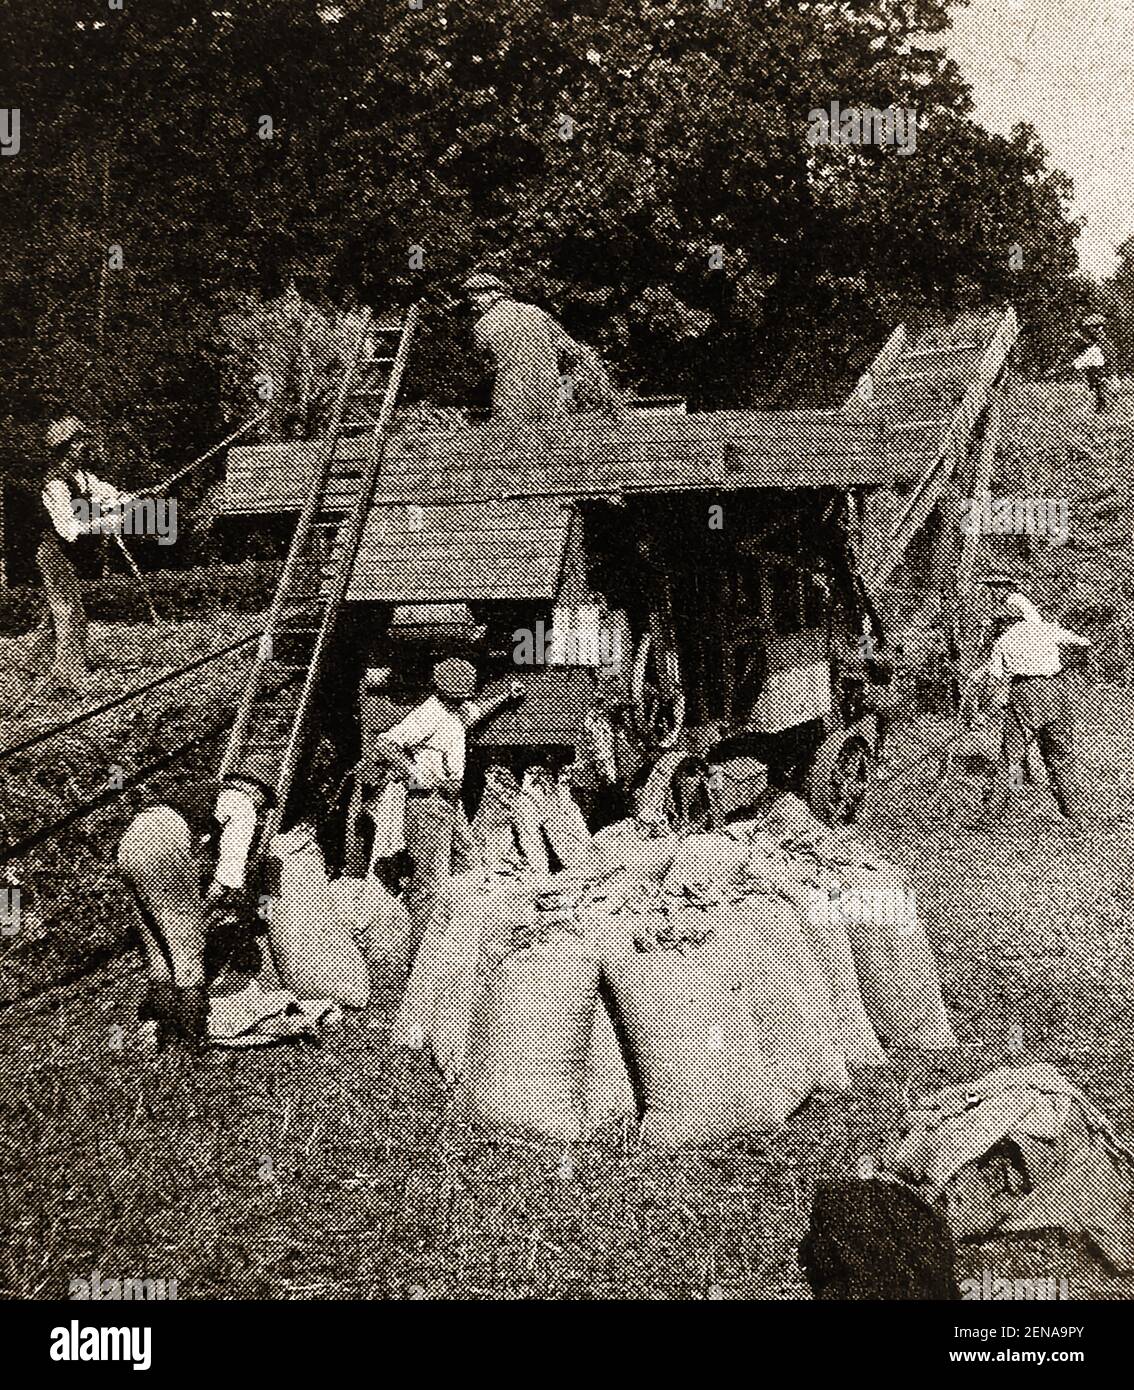 British farmers using an old fashioned belt driven threshing machine Circa 1930's. Stock Photo